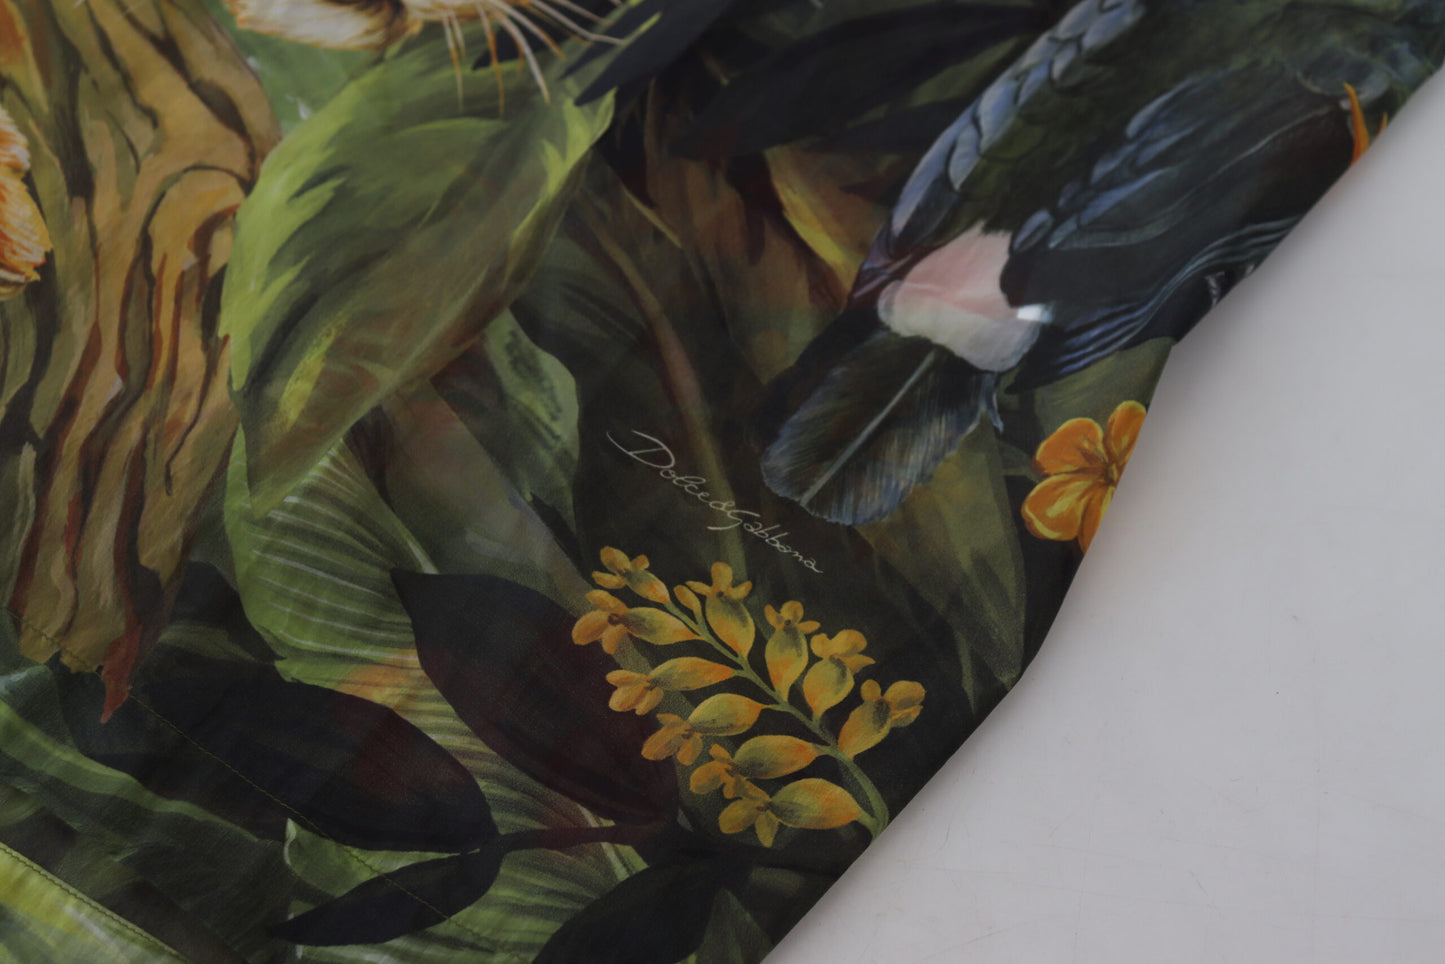 Exotic Jungle Print Casual Shirt